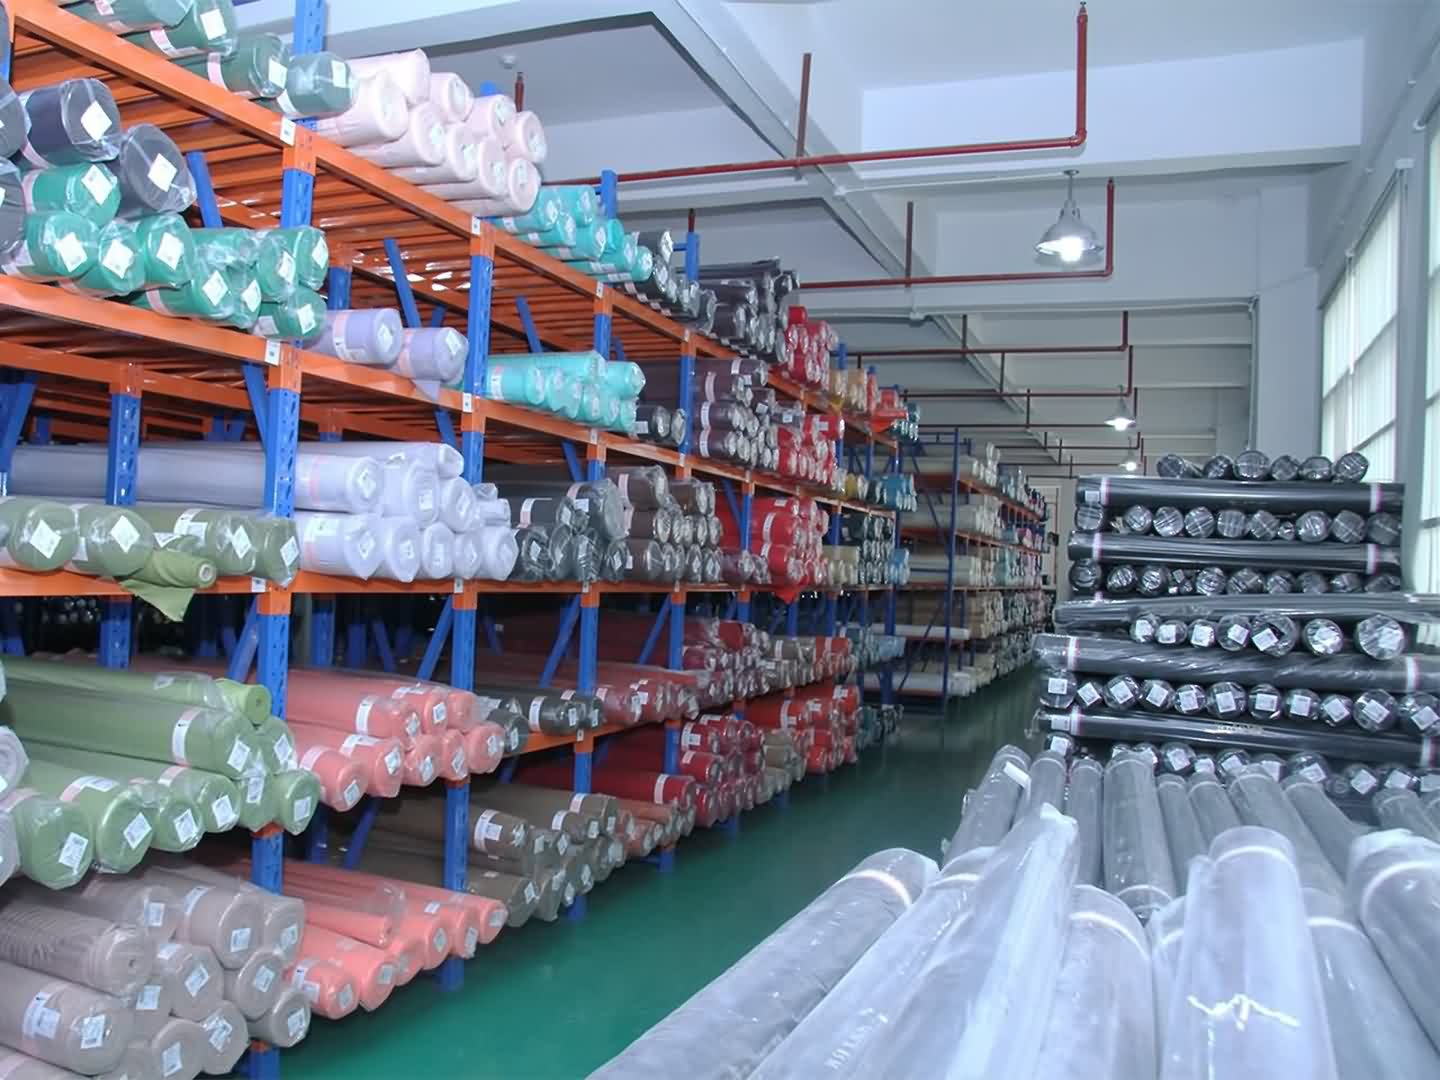 10-Fabric warehouse